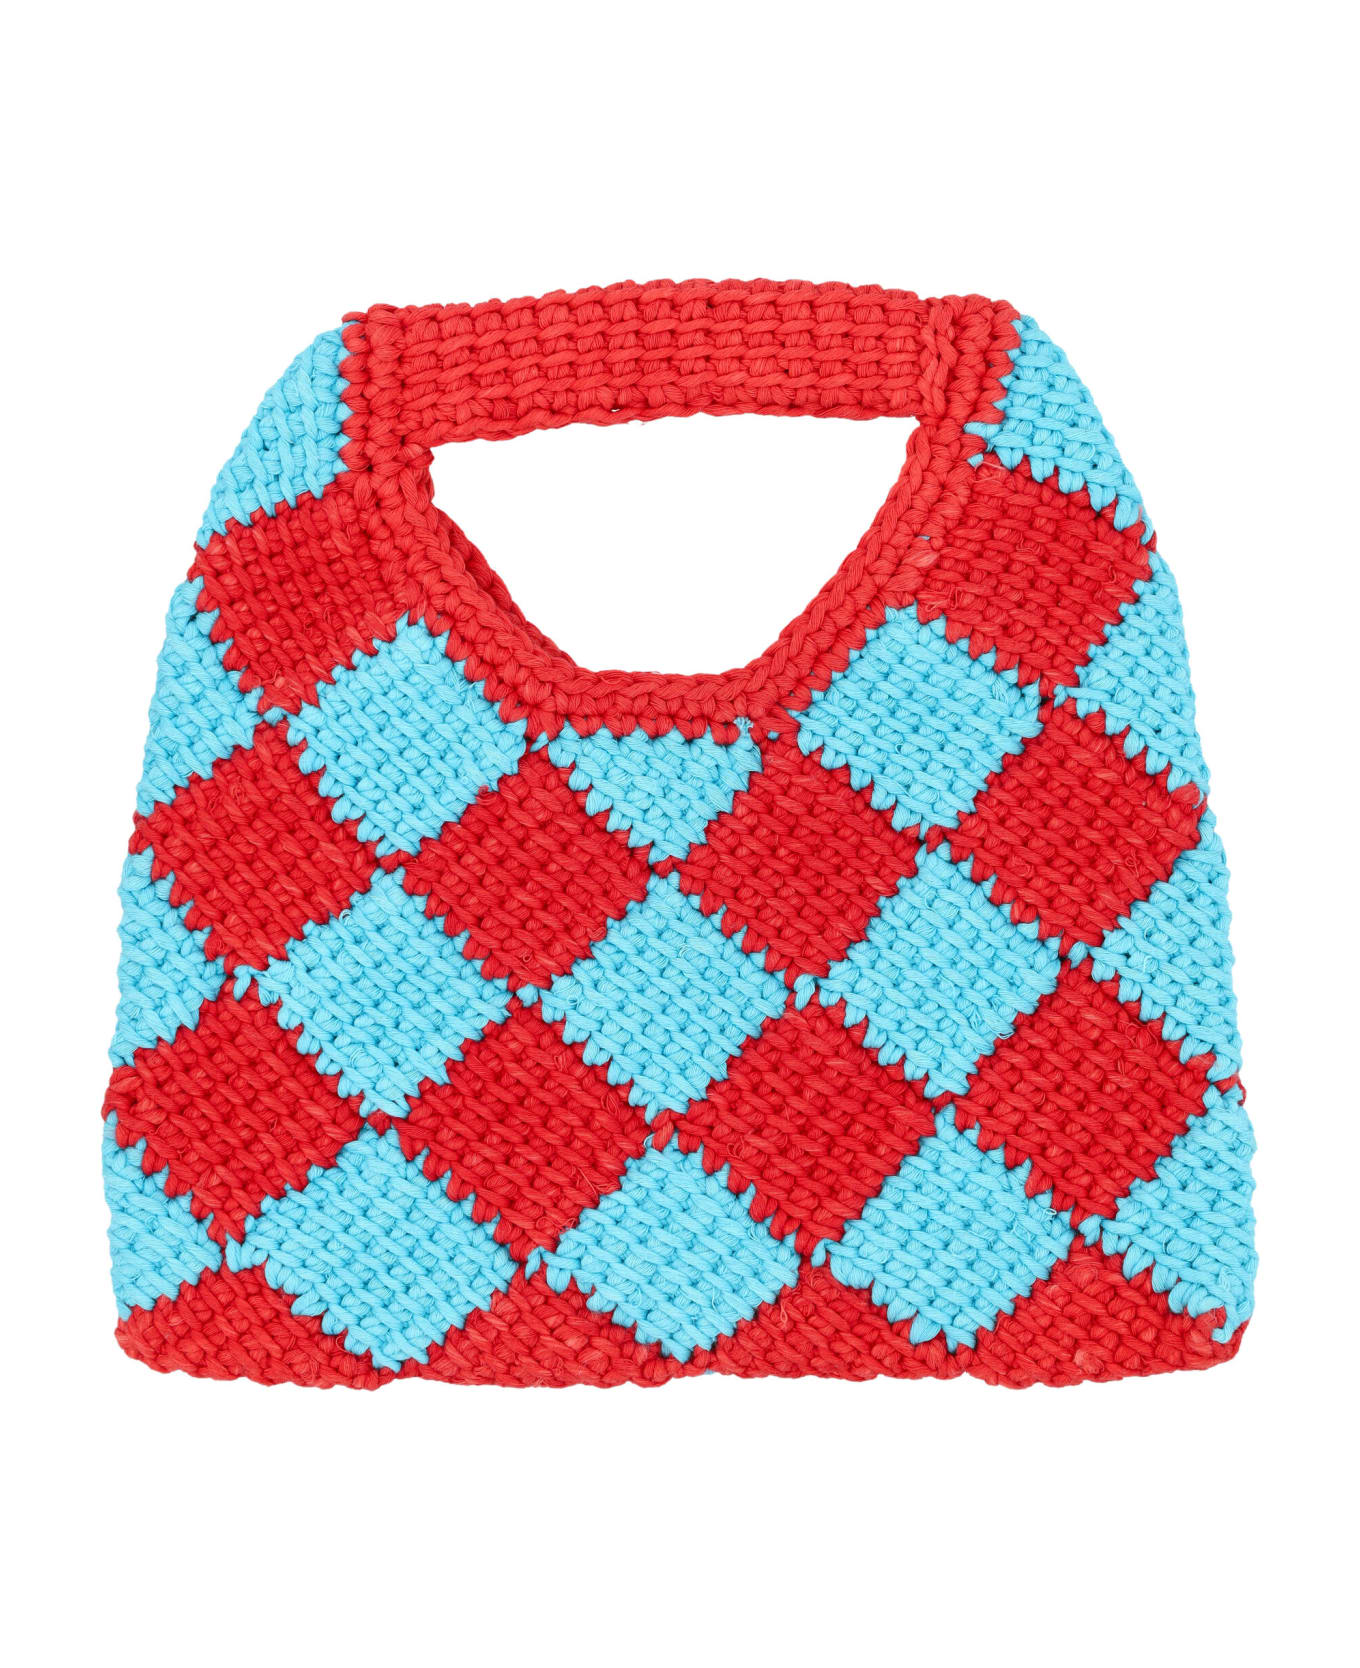 Marni Diamond Crochet Bag - BLUE/RED